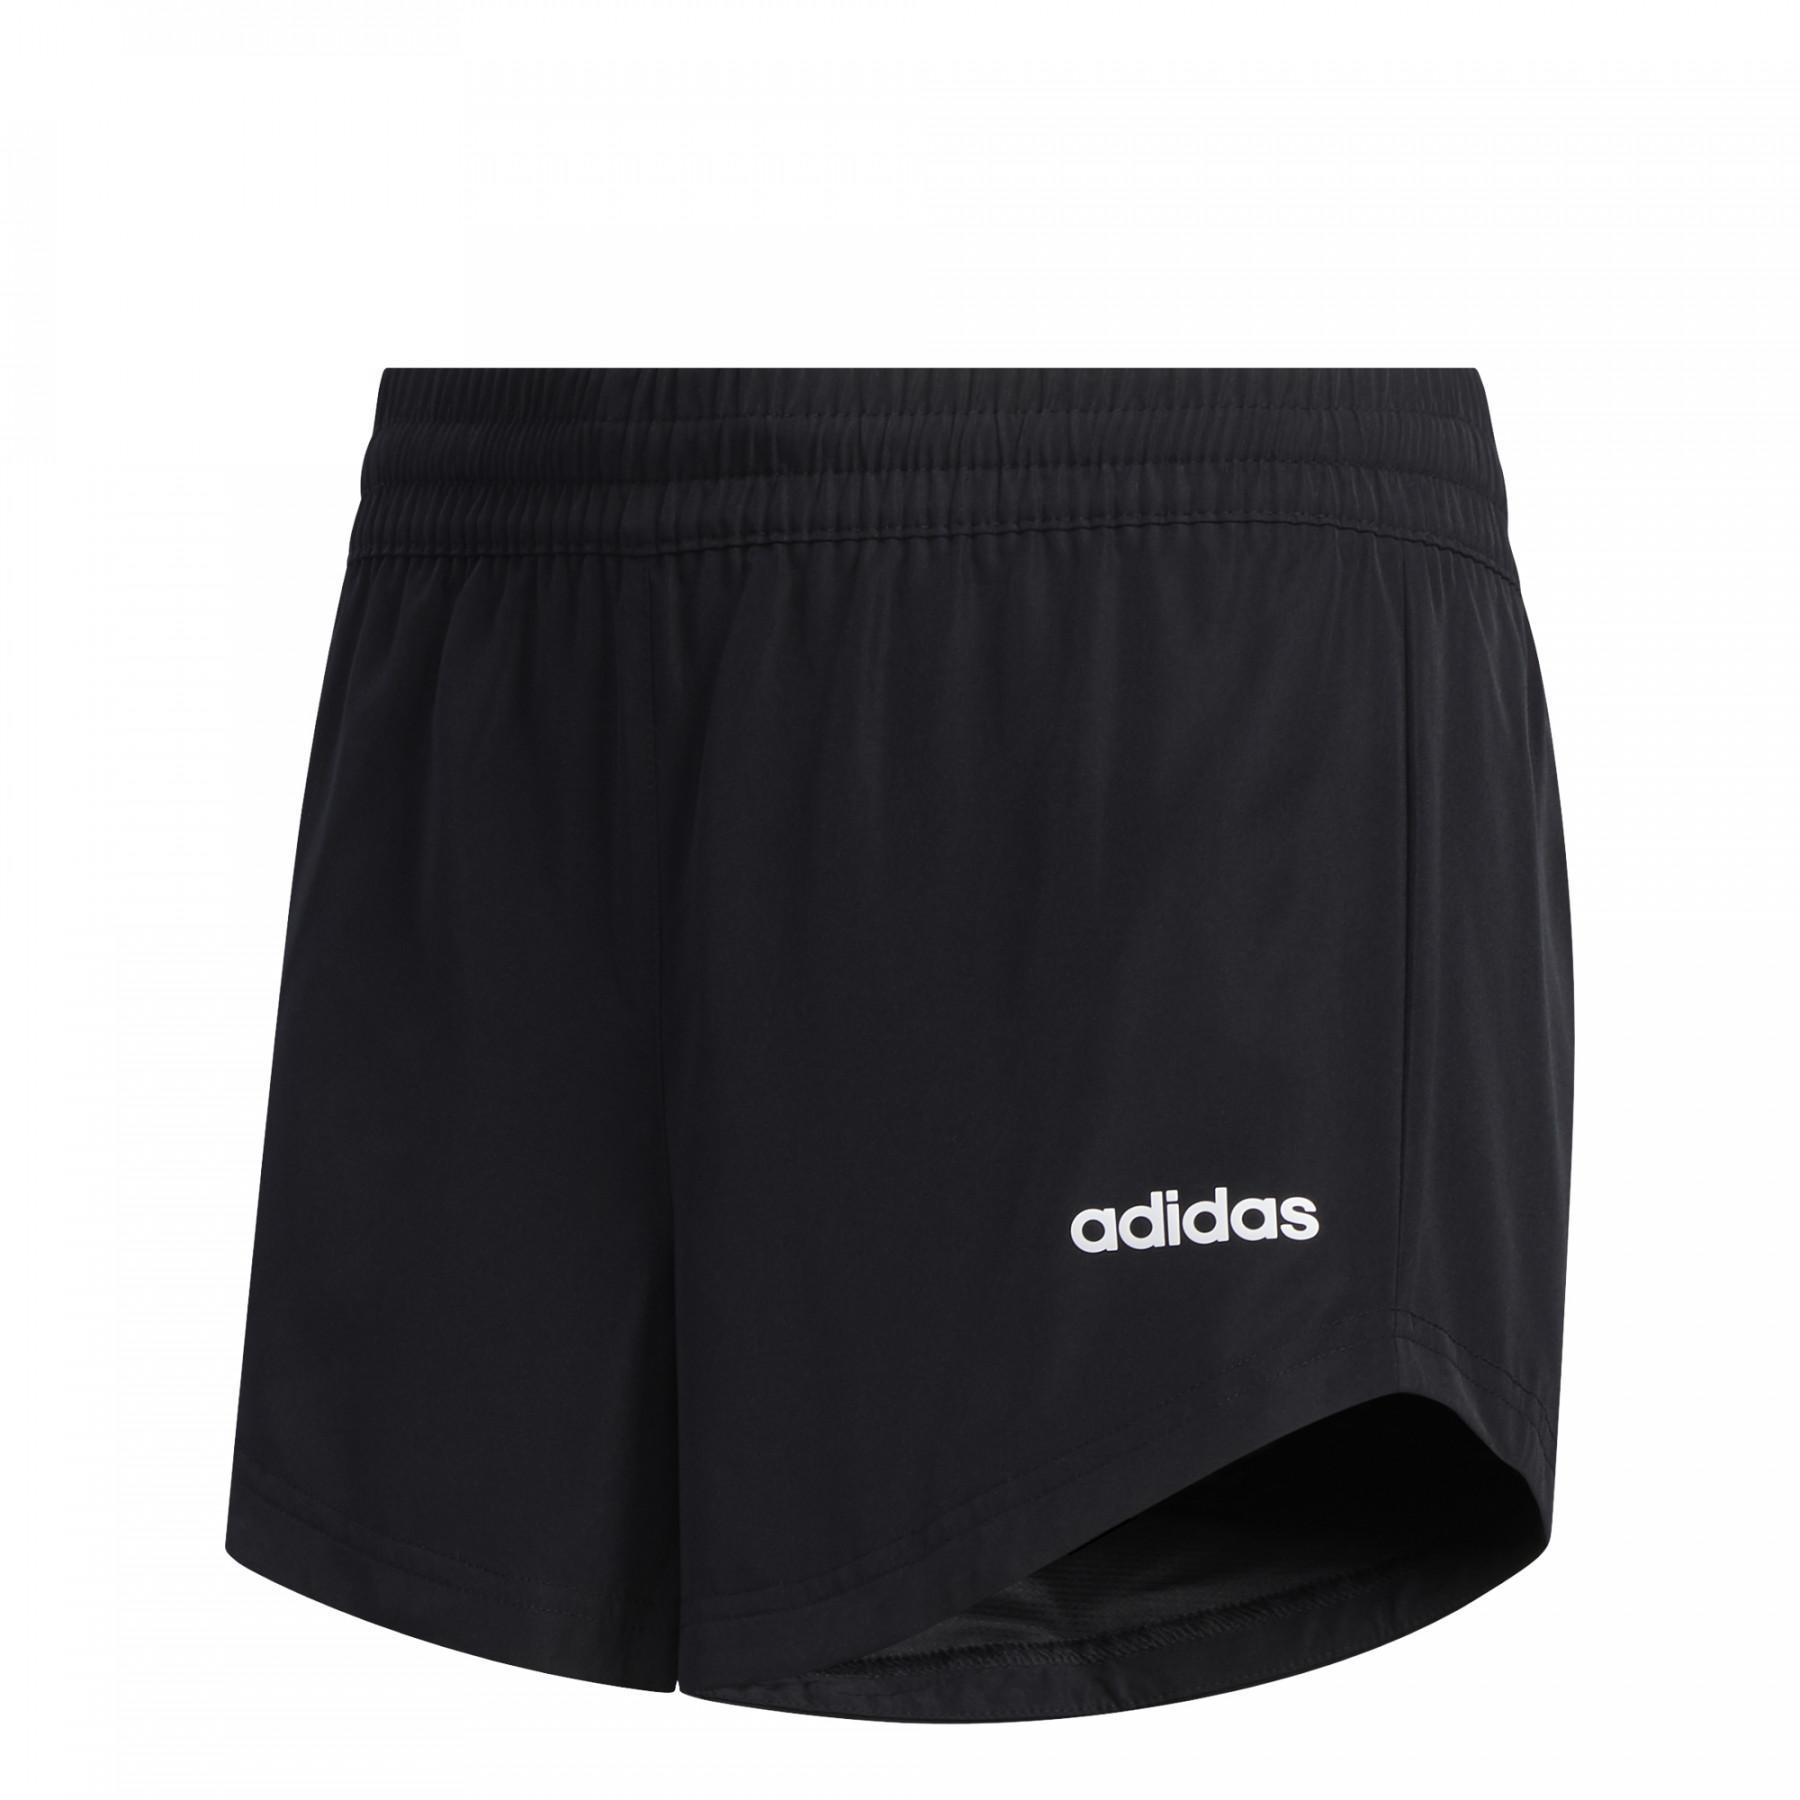 Children's shorts adidas Basic